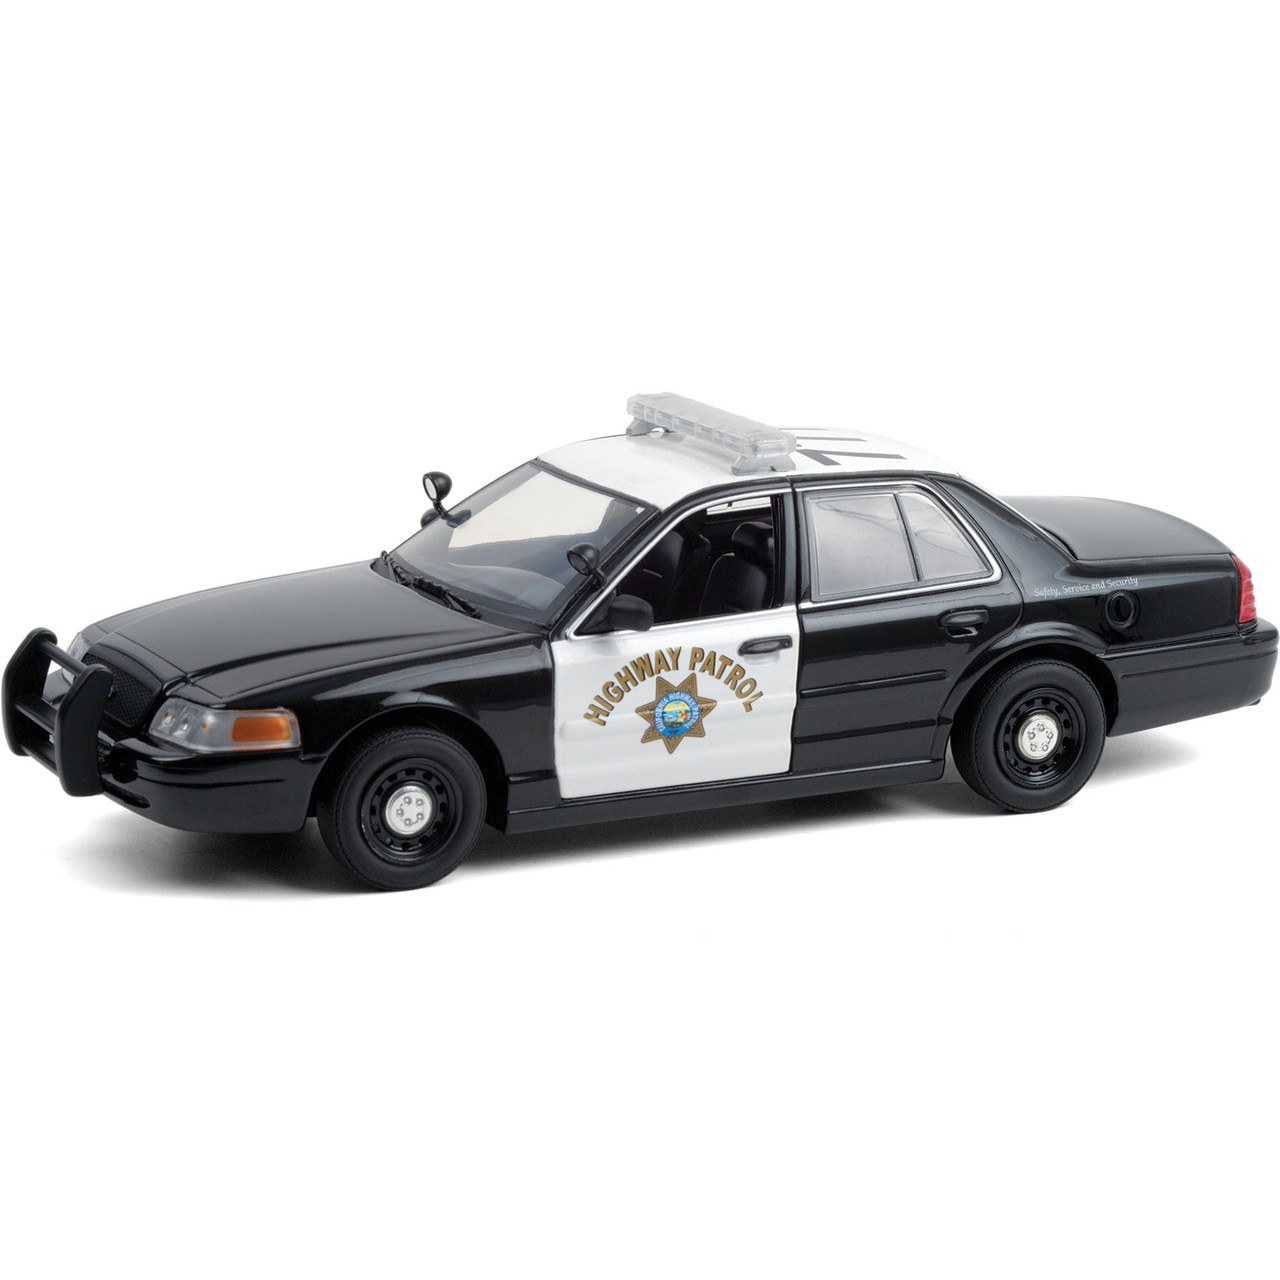 2008 Ford Crown Victoria Police Interceptor California Highway Patrol 1:24  Scale Diecast Model Car by Greenlight